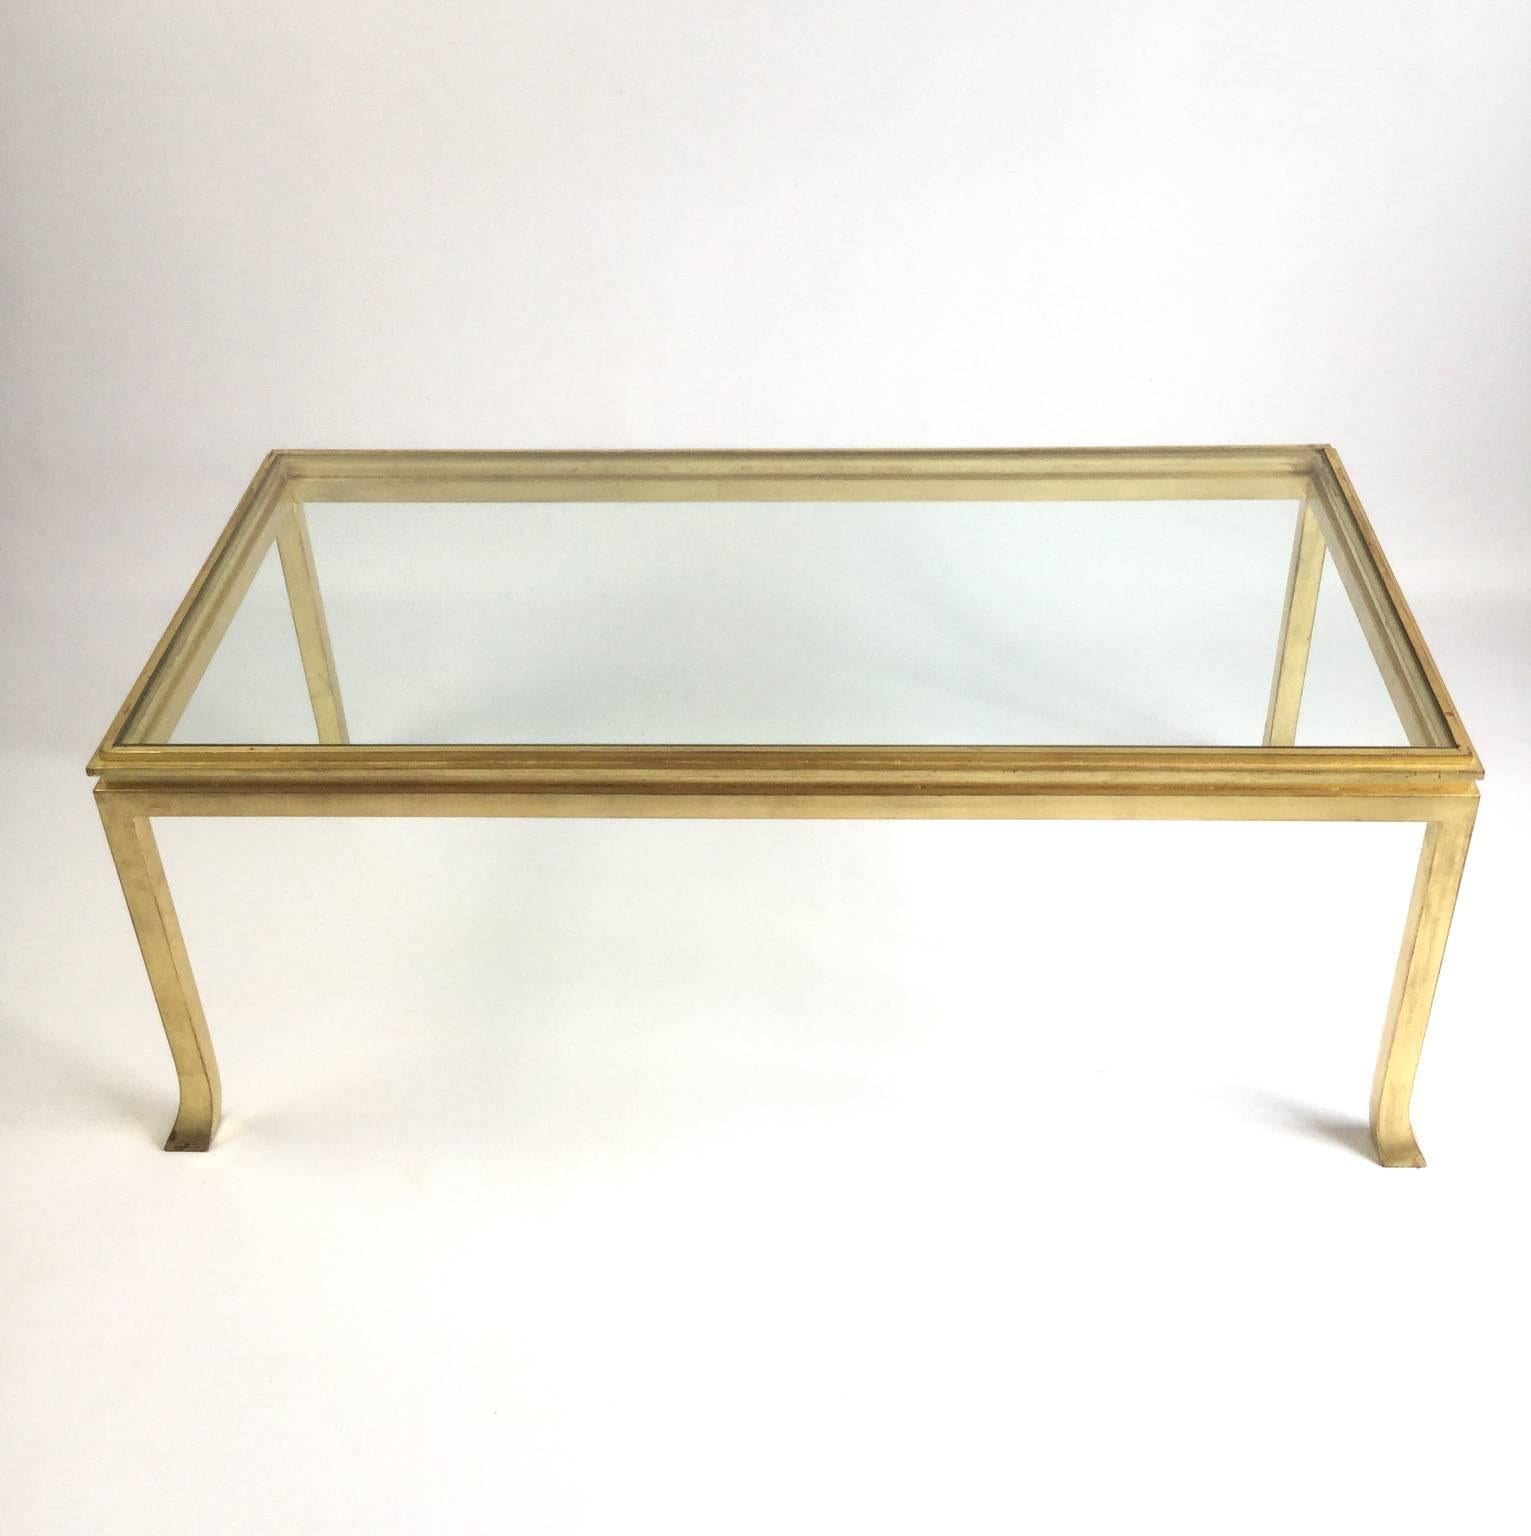 Gilt patinated metal coffee table with original rectangular high quality top glass.